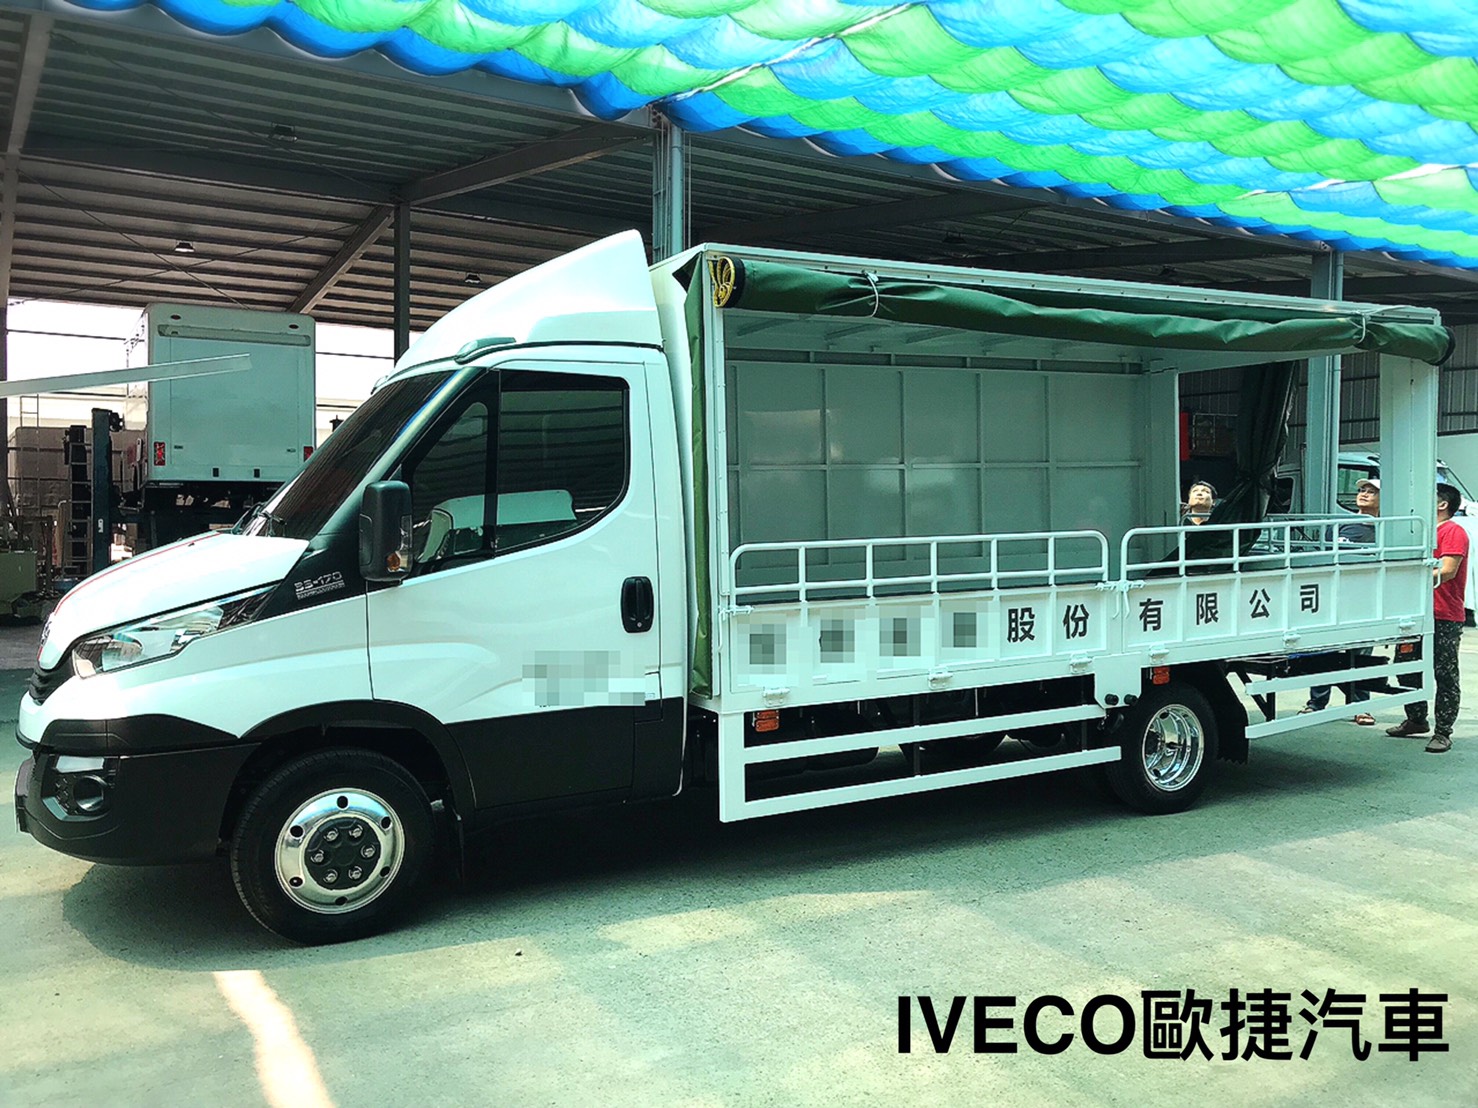 IVECO鋁製貨車車廂